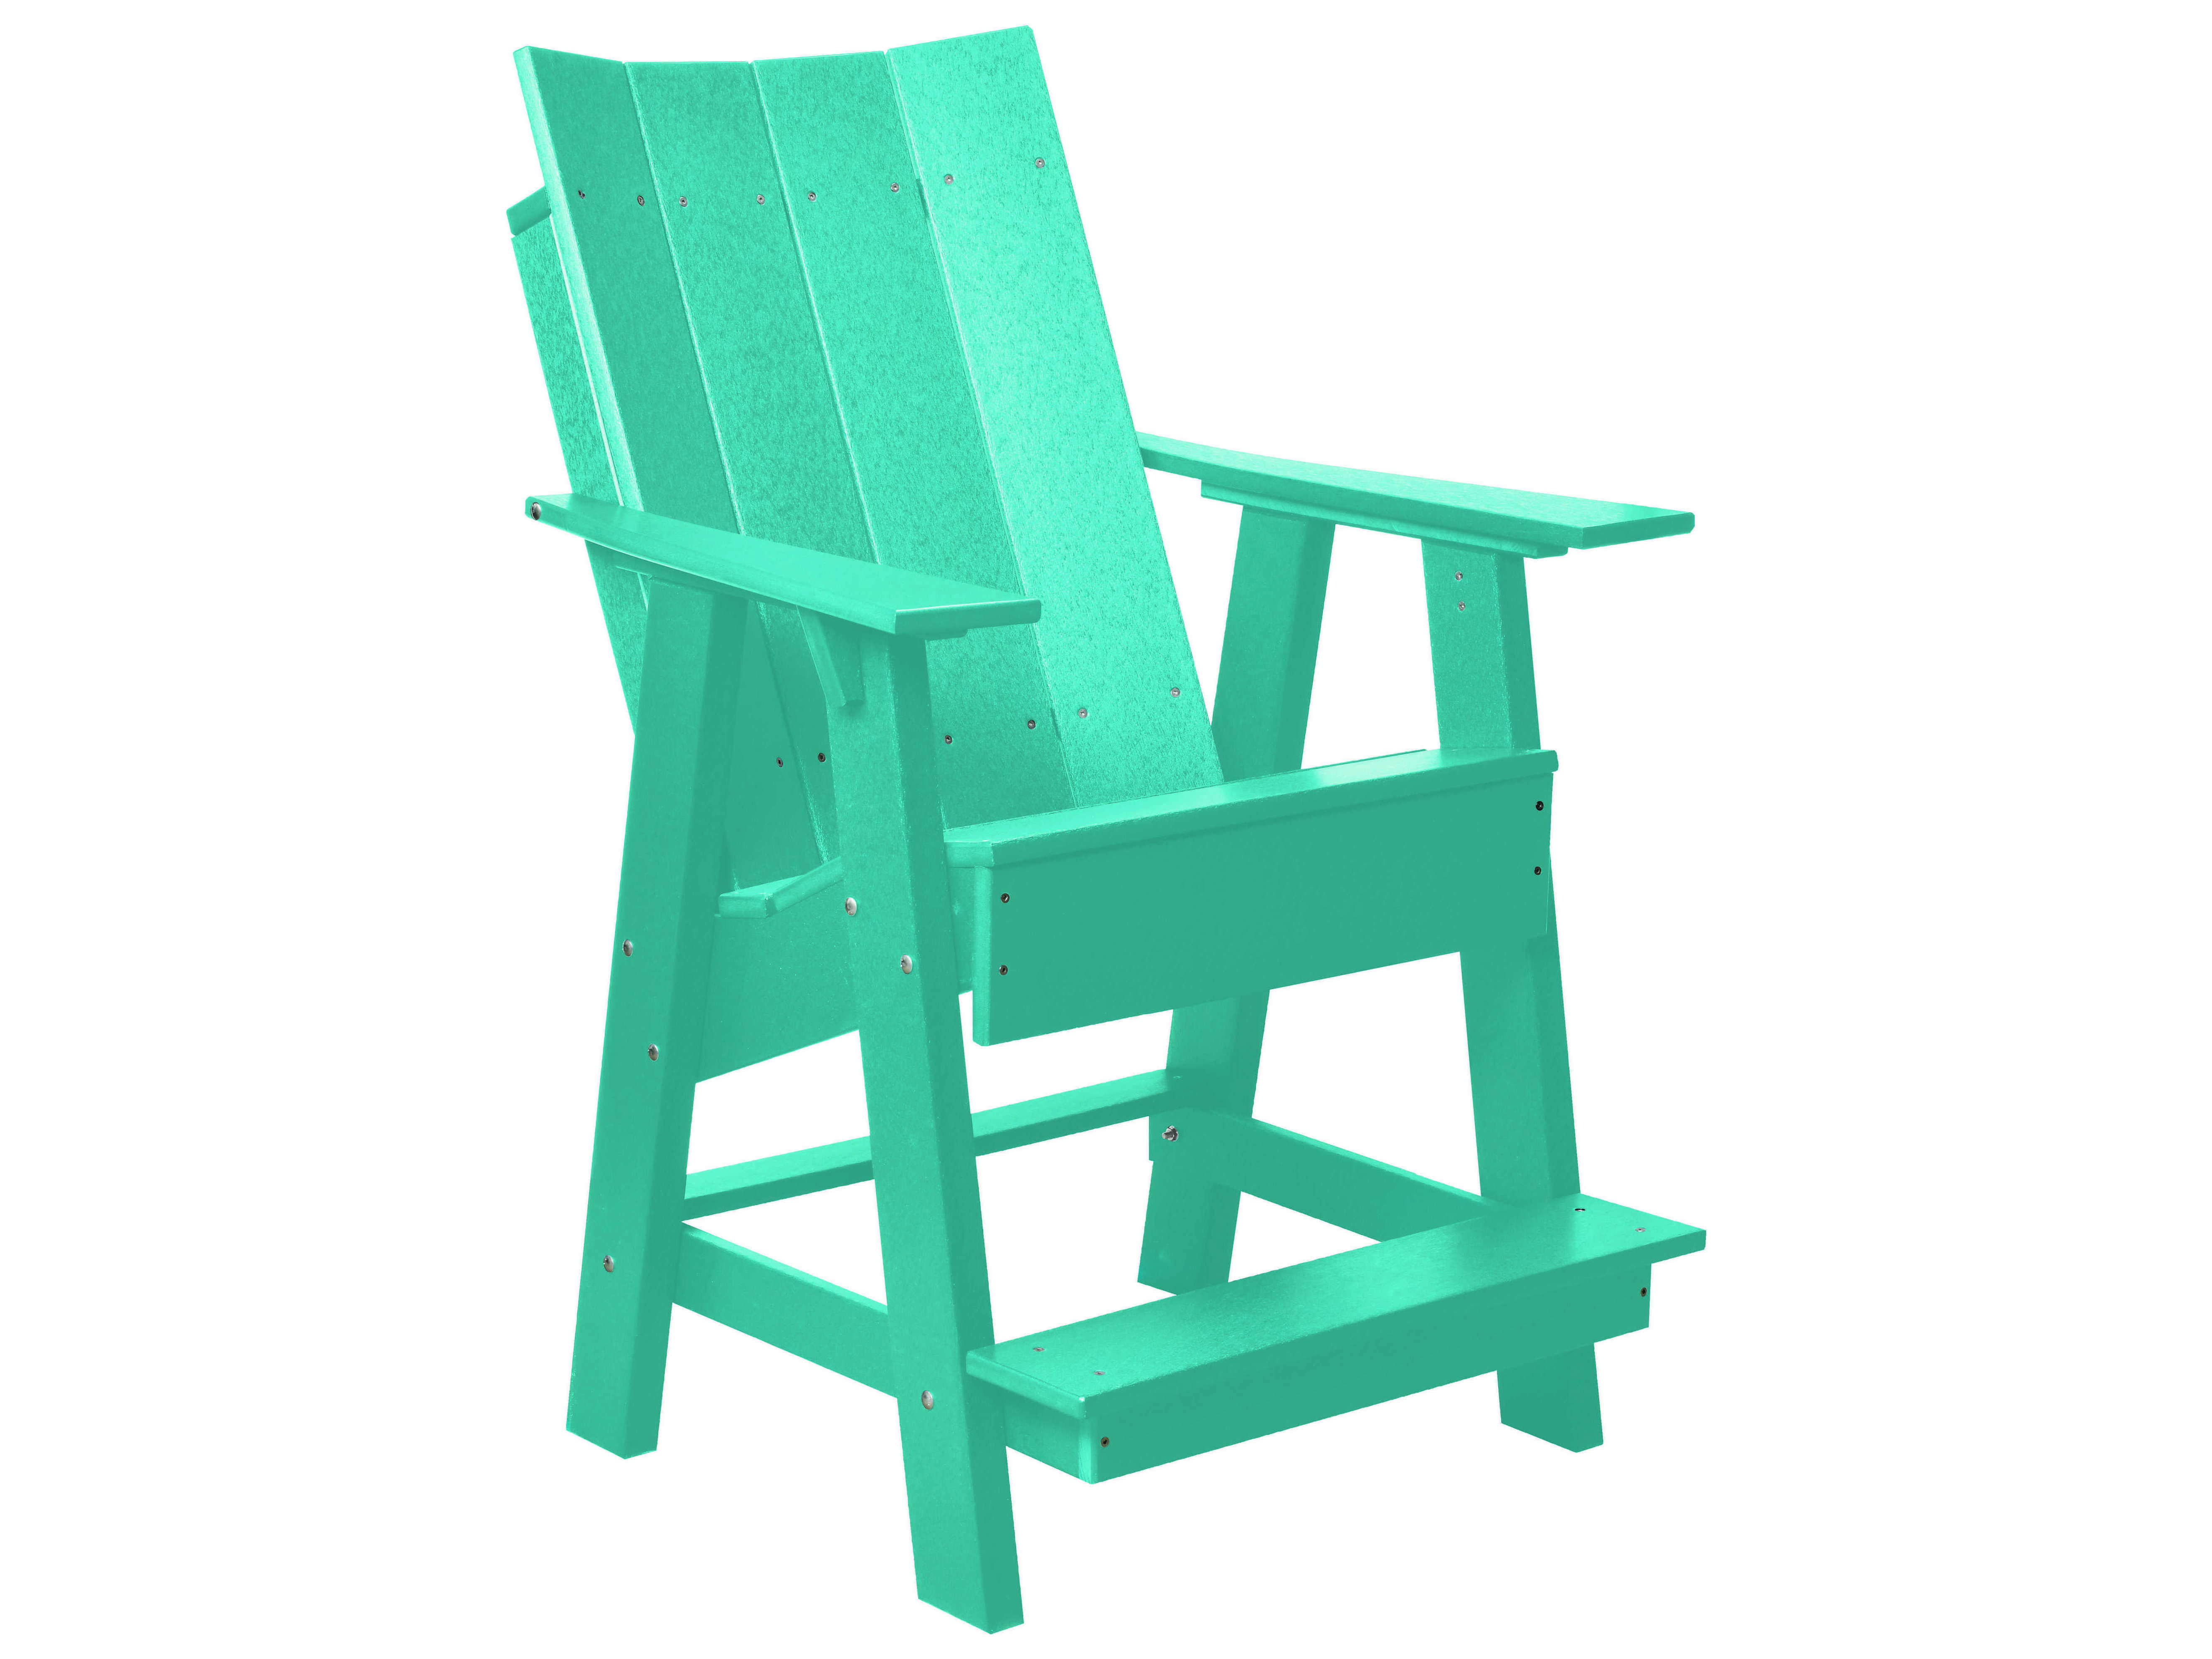 Modern Costco Long Beach Folding Adirondack Chair for Small Space